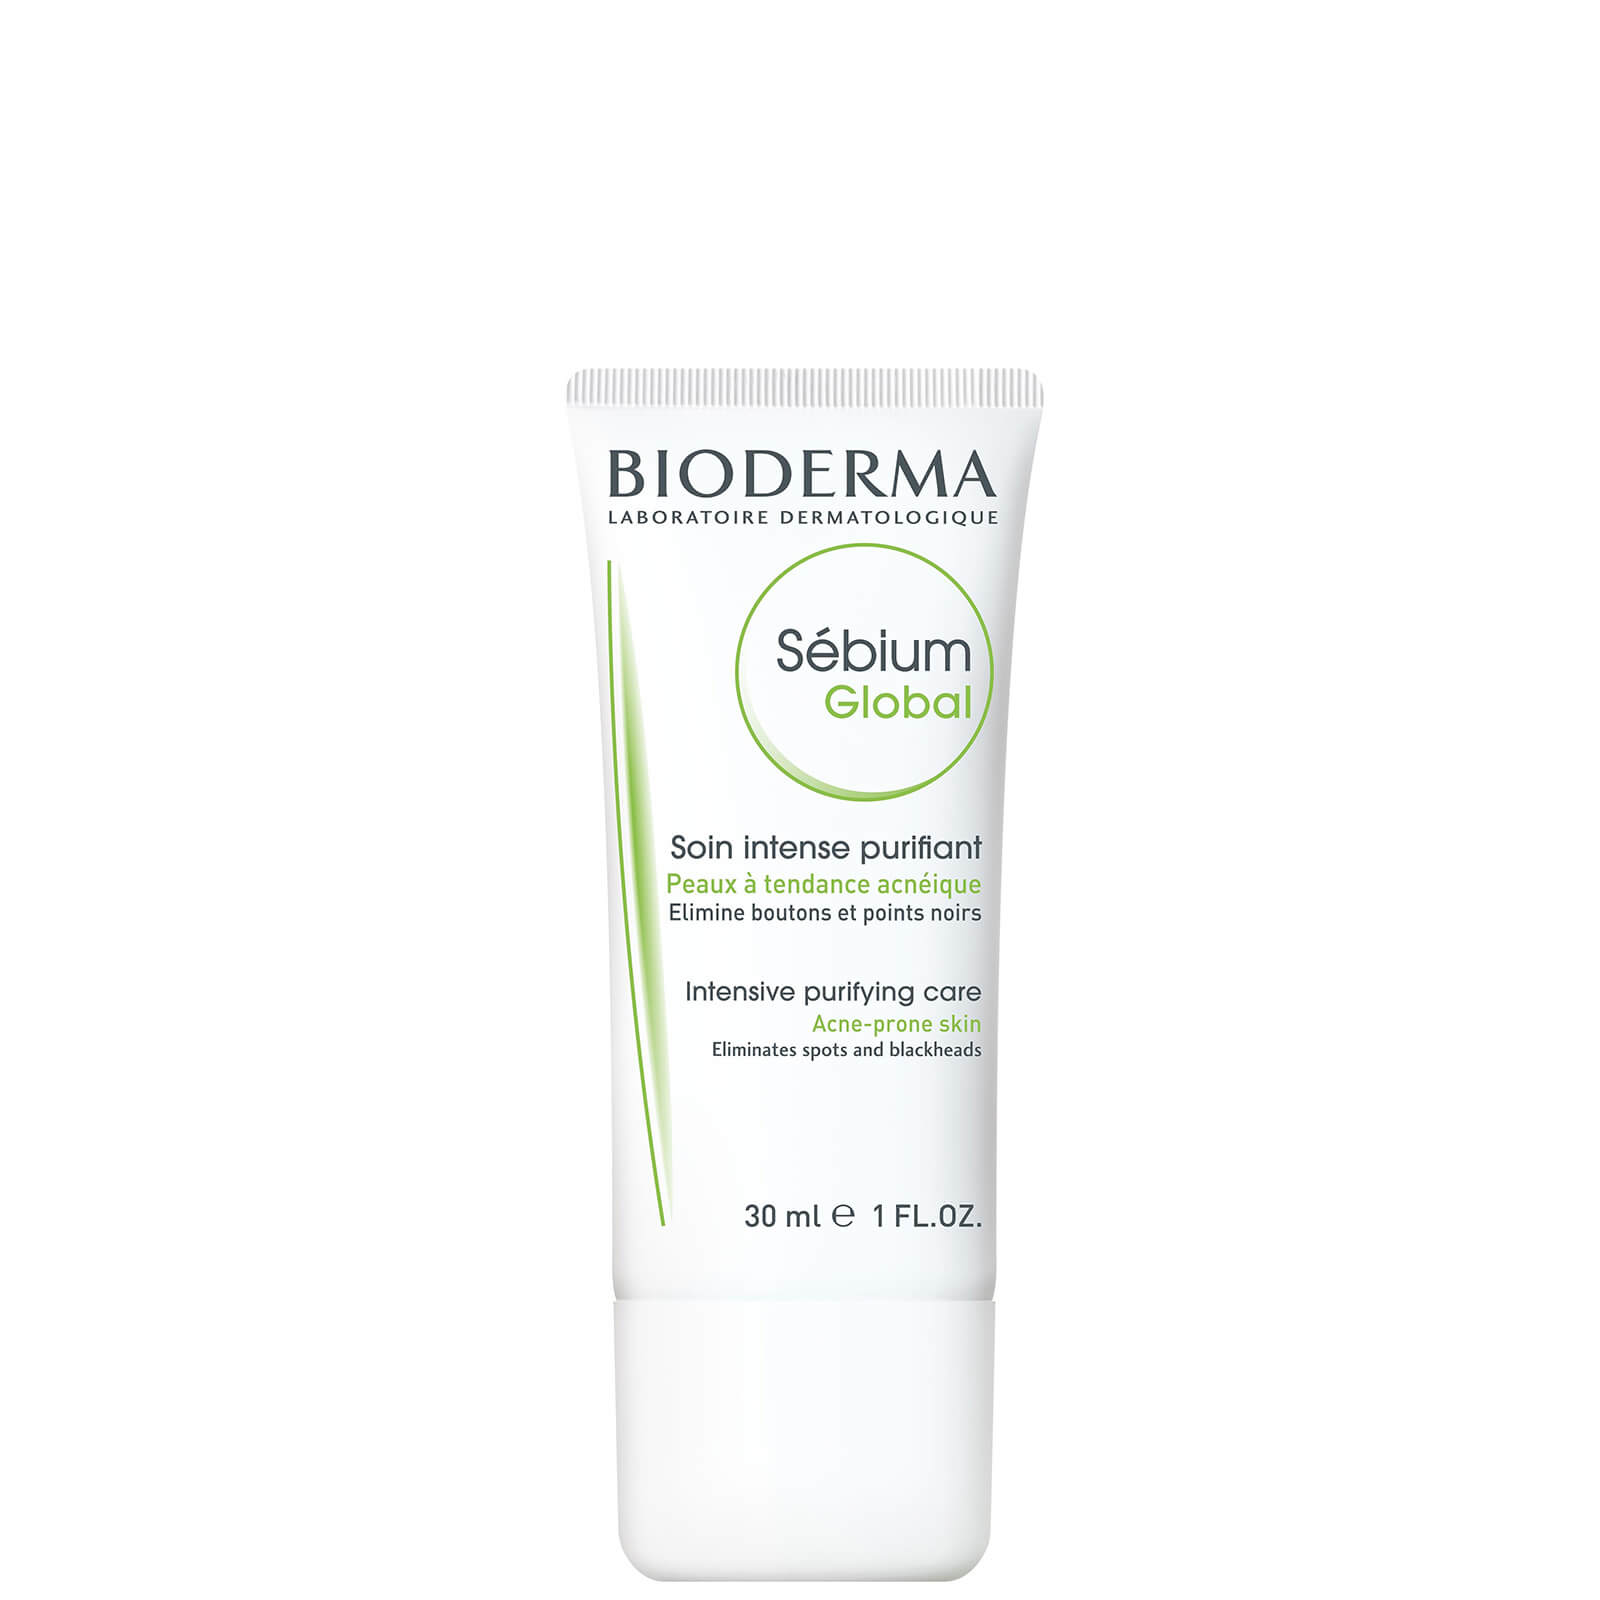 Bioderma Sebium Global Intensive Purifying Cream For Acne-Prone Skin 30ml (Worth $23.99)